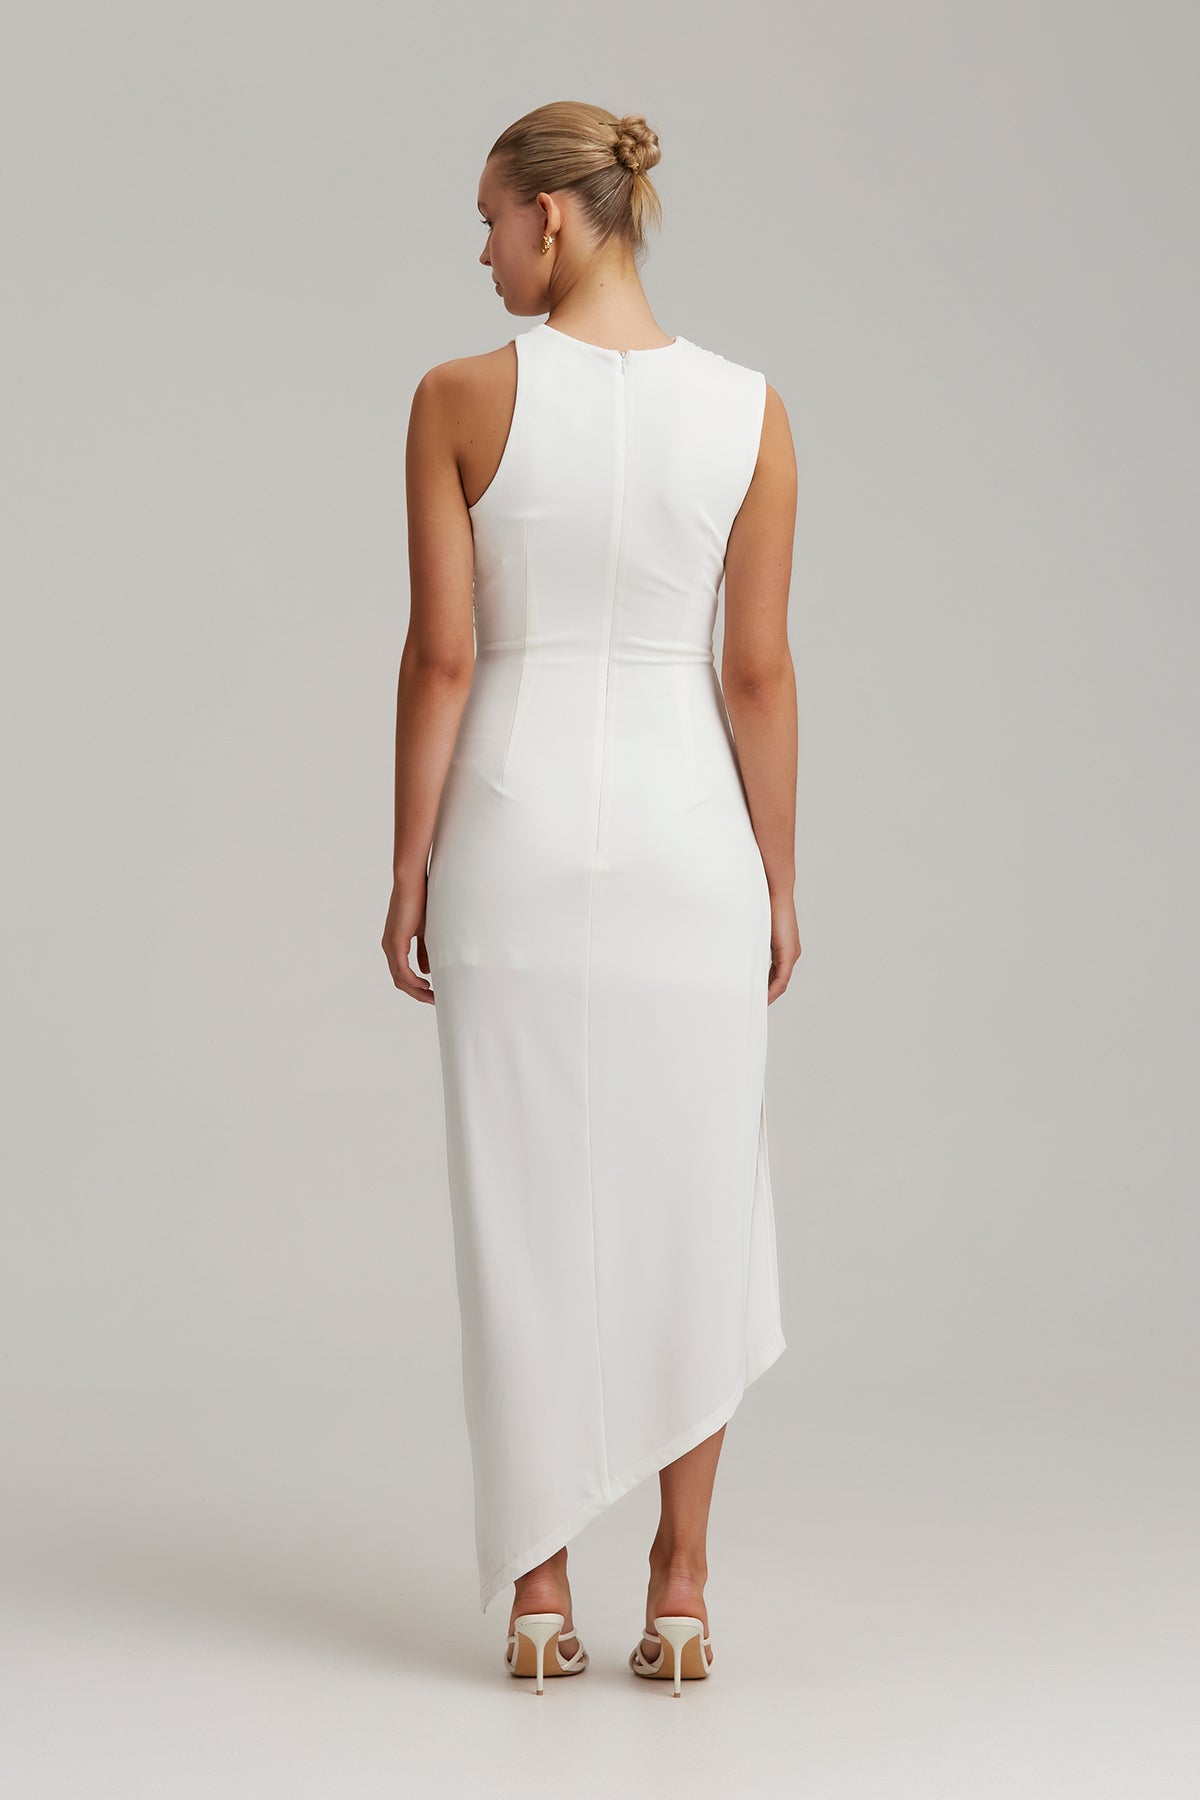 C/MEO Collective - Entropy Dress - White